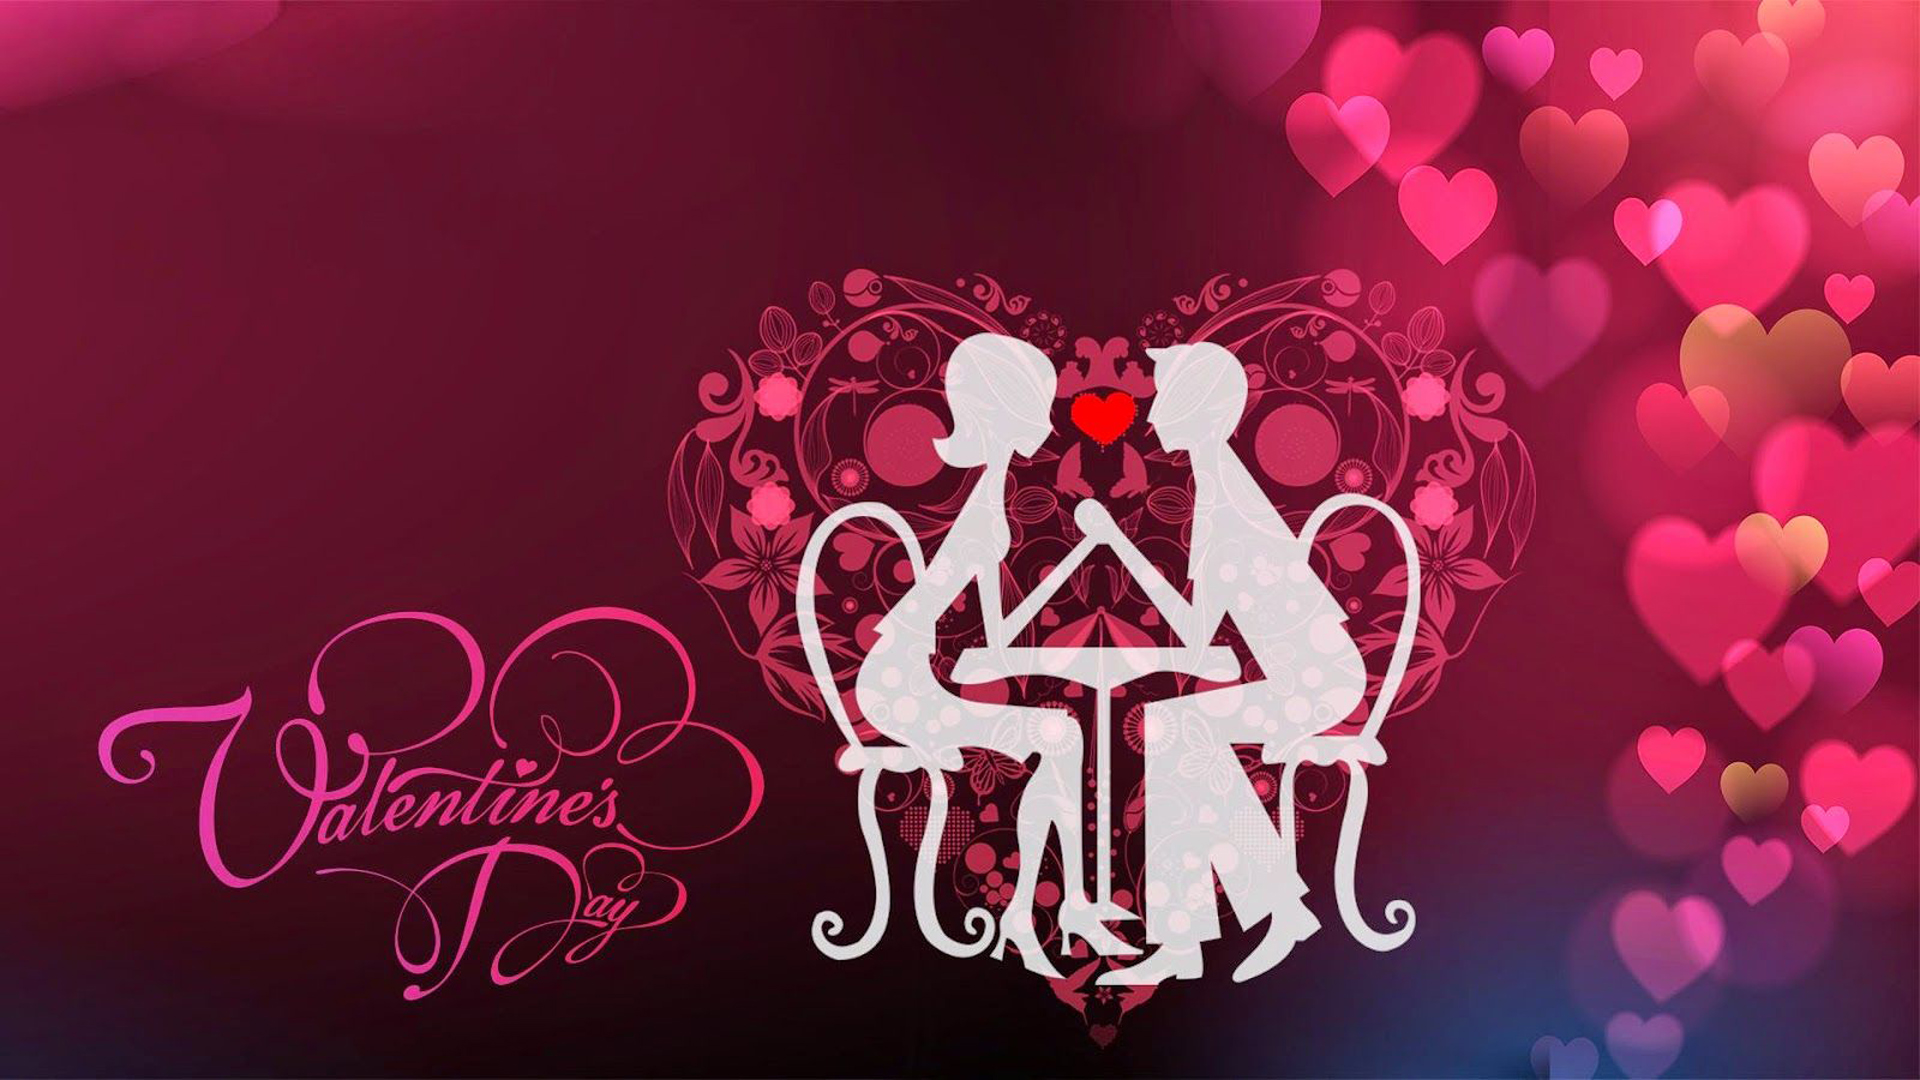 Happy Valentine's Day Meeting Loving Loving Couple Hearts Graphics